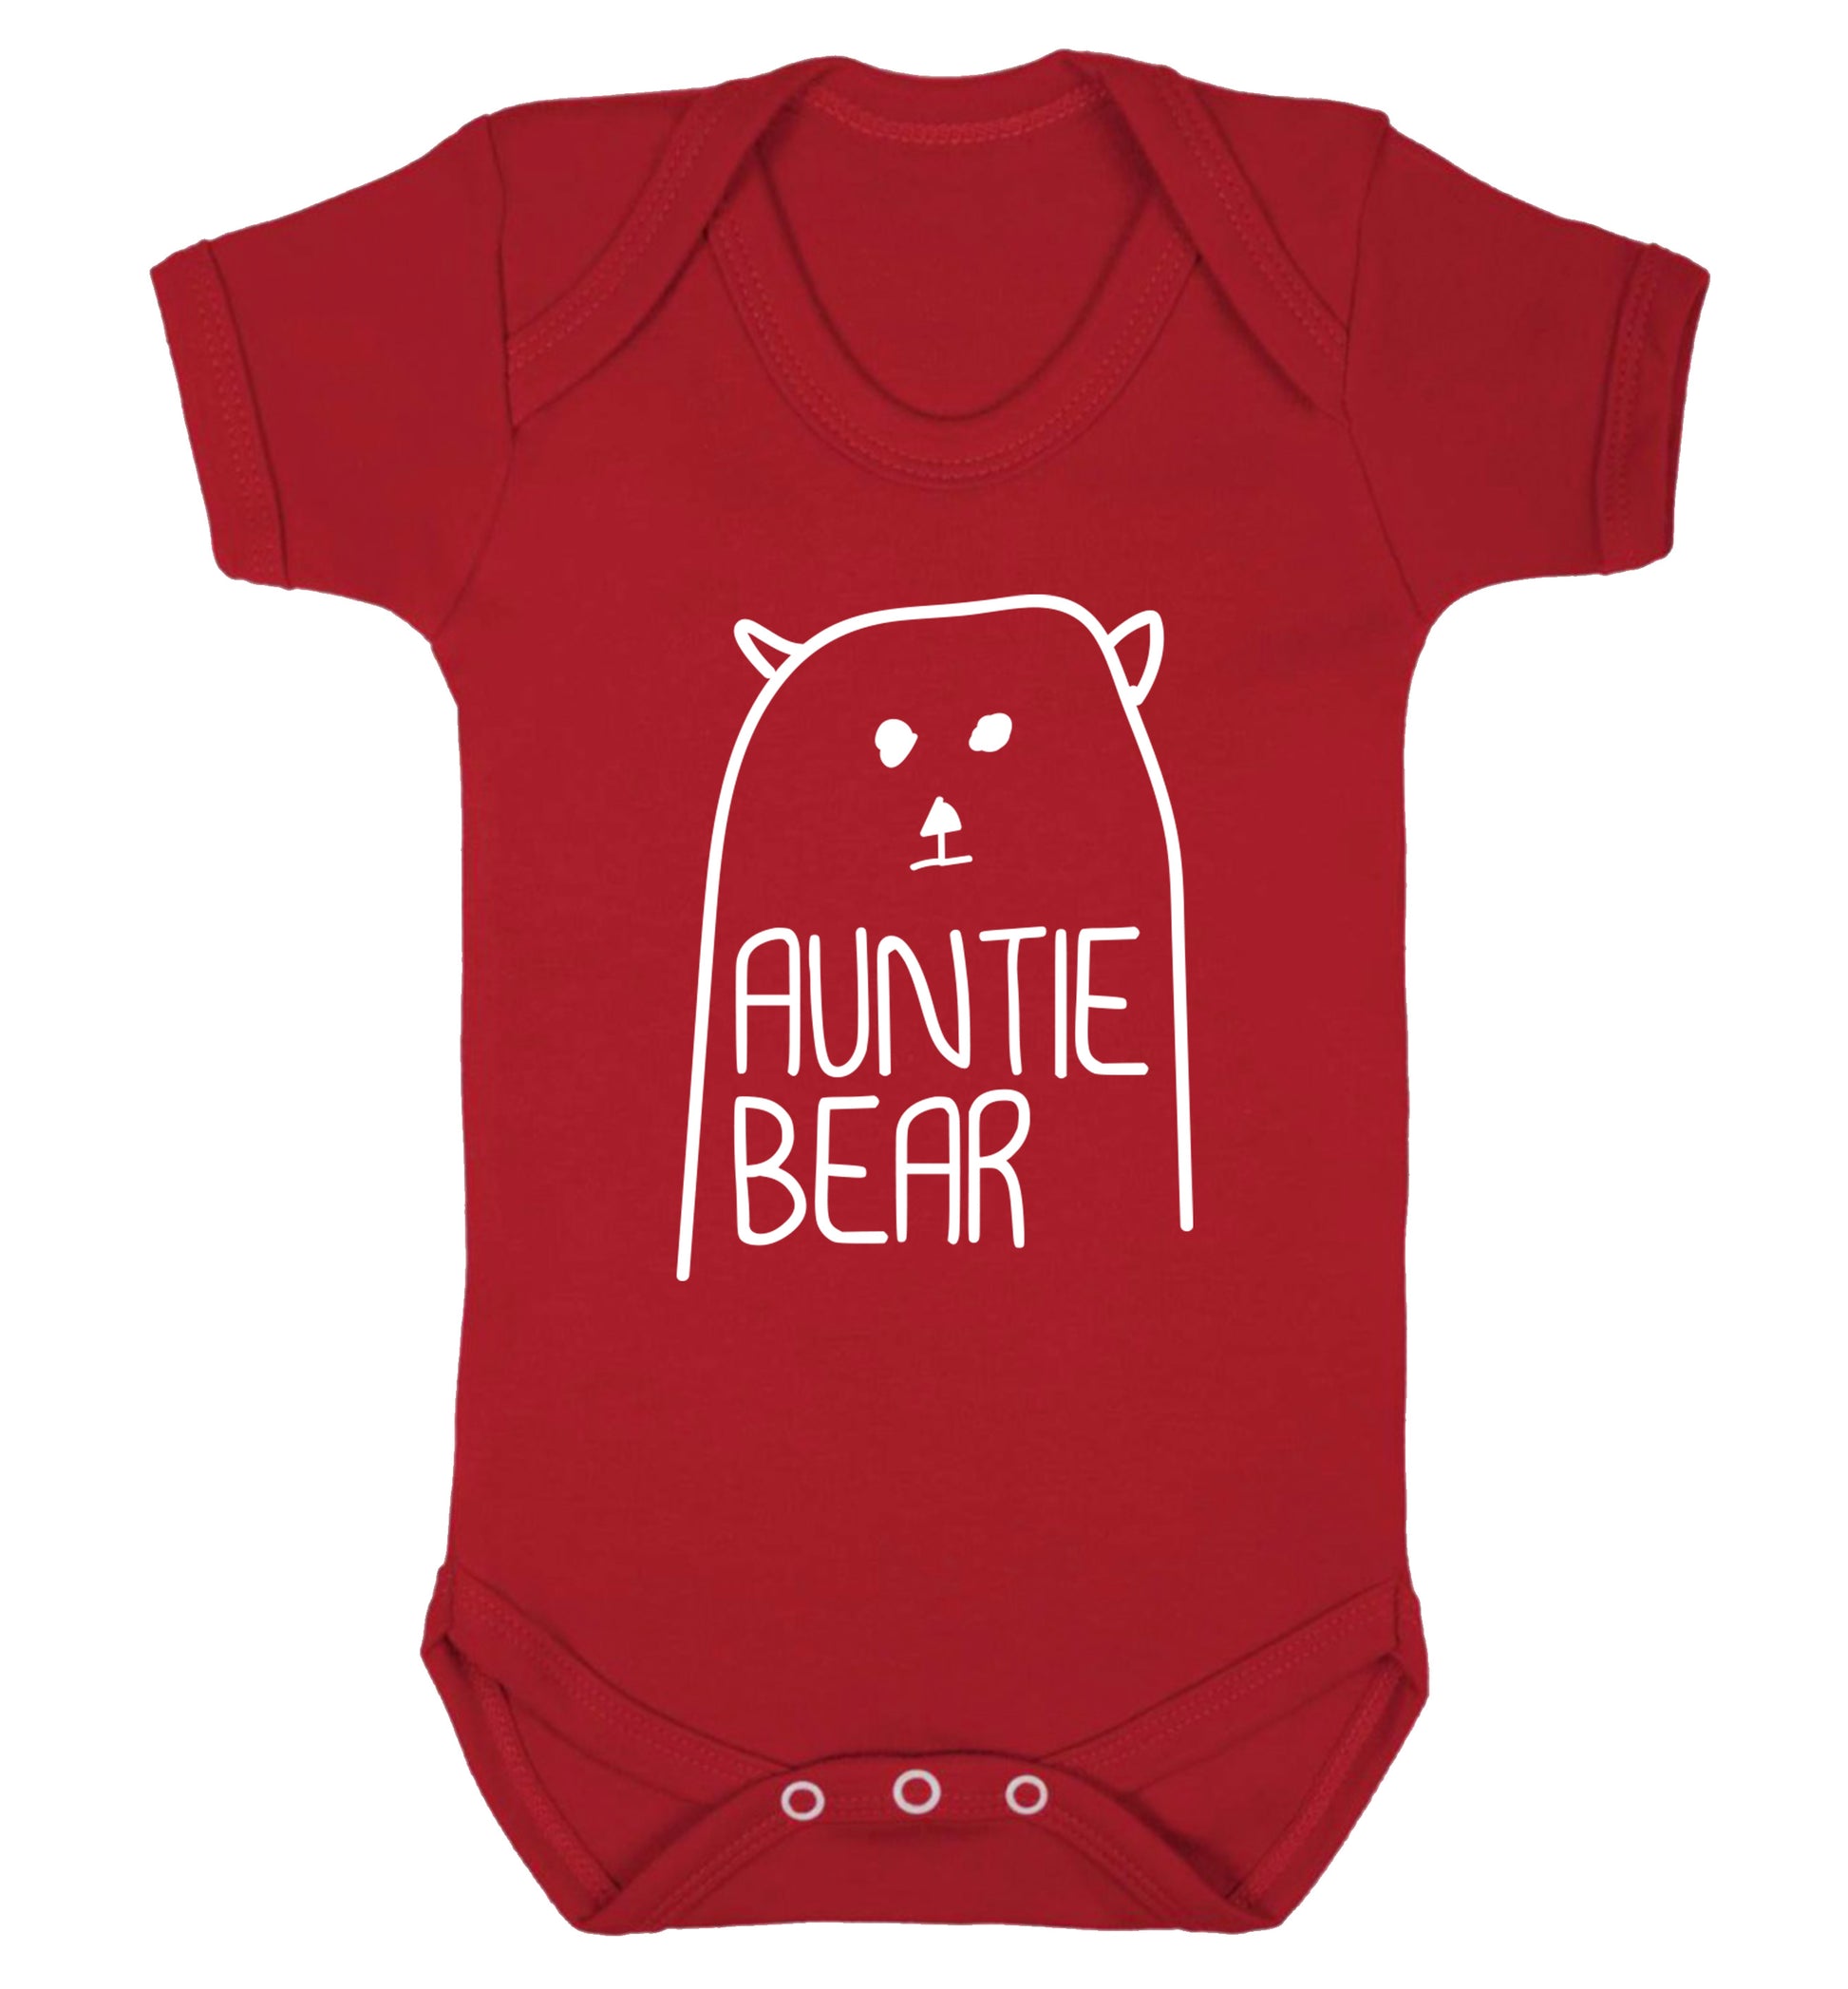 Auntie bear Baby Vest red 18-24 months